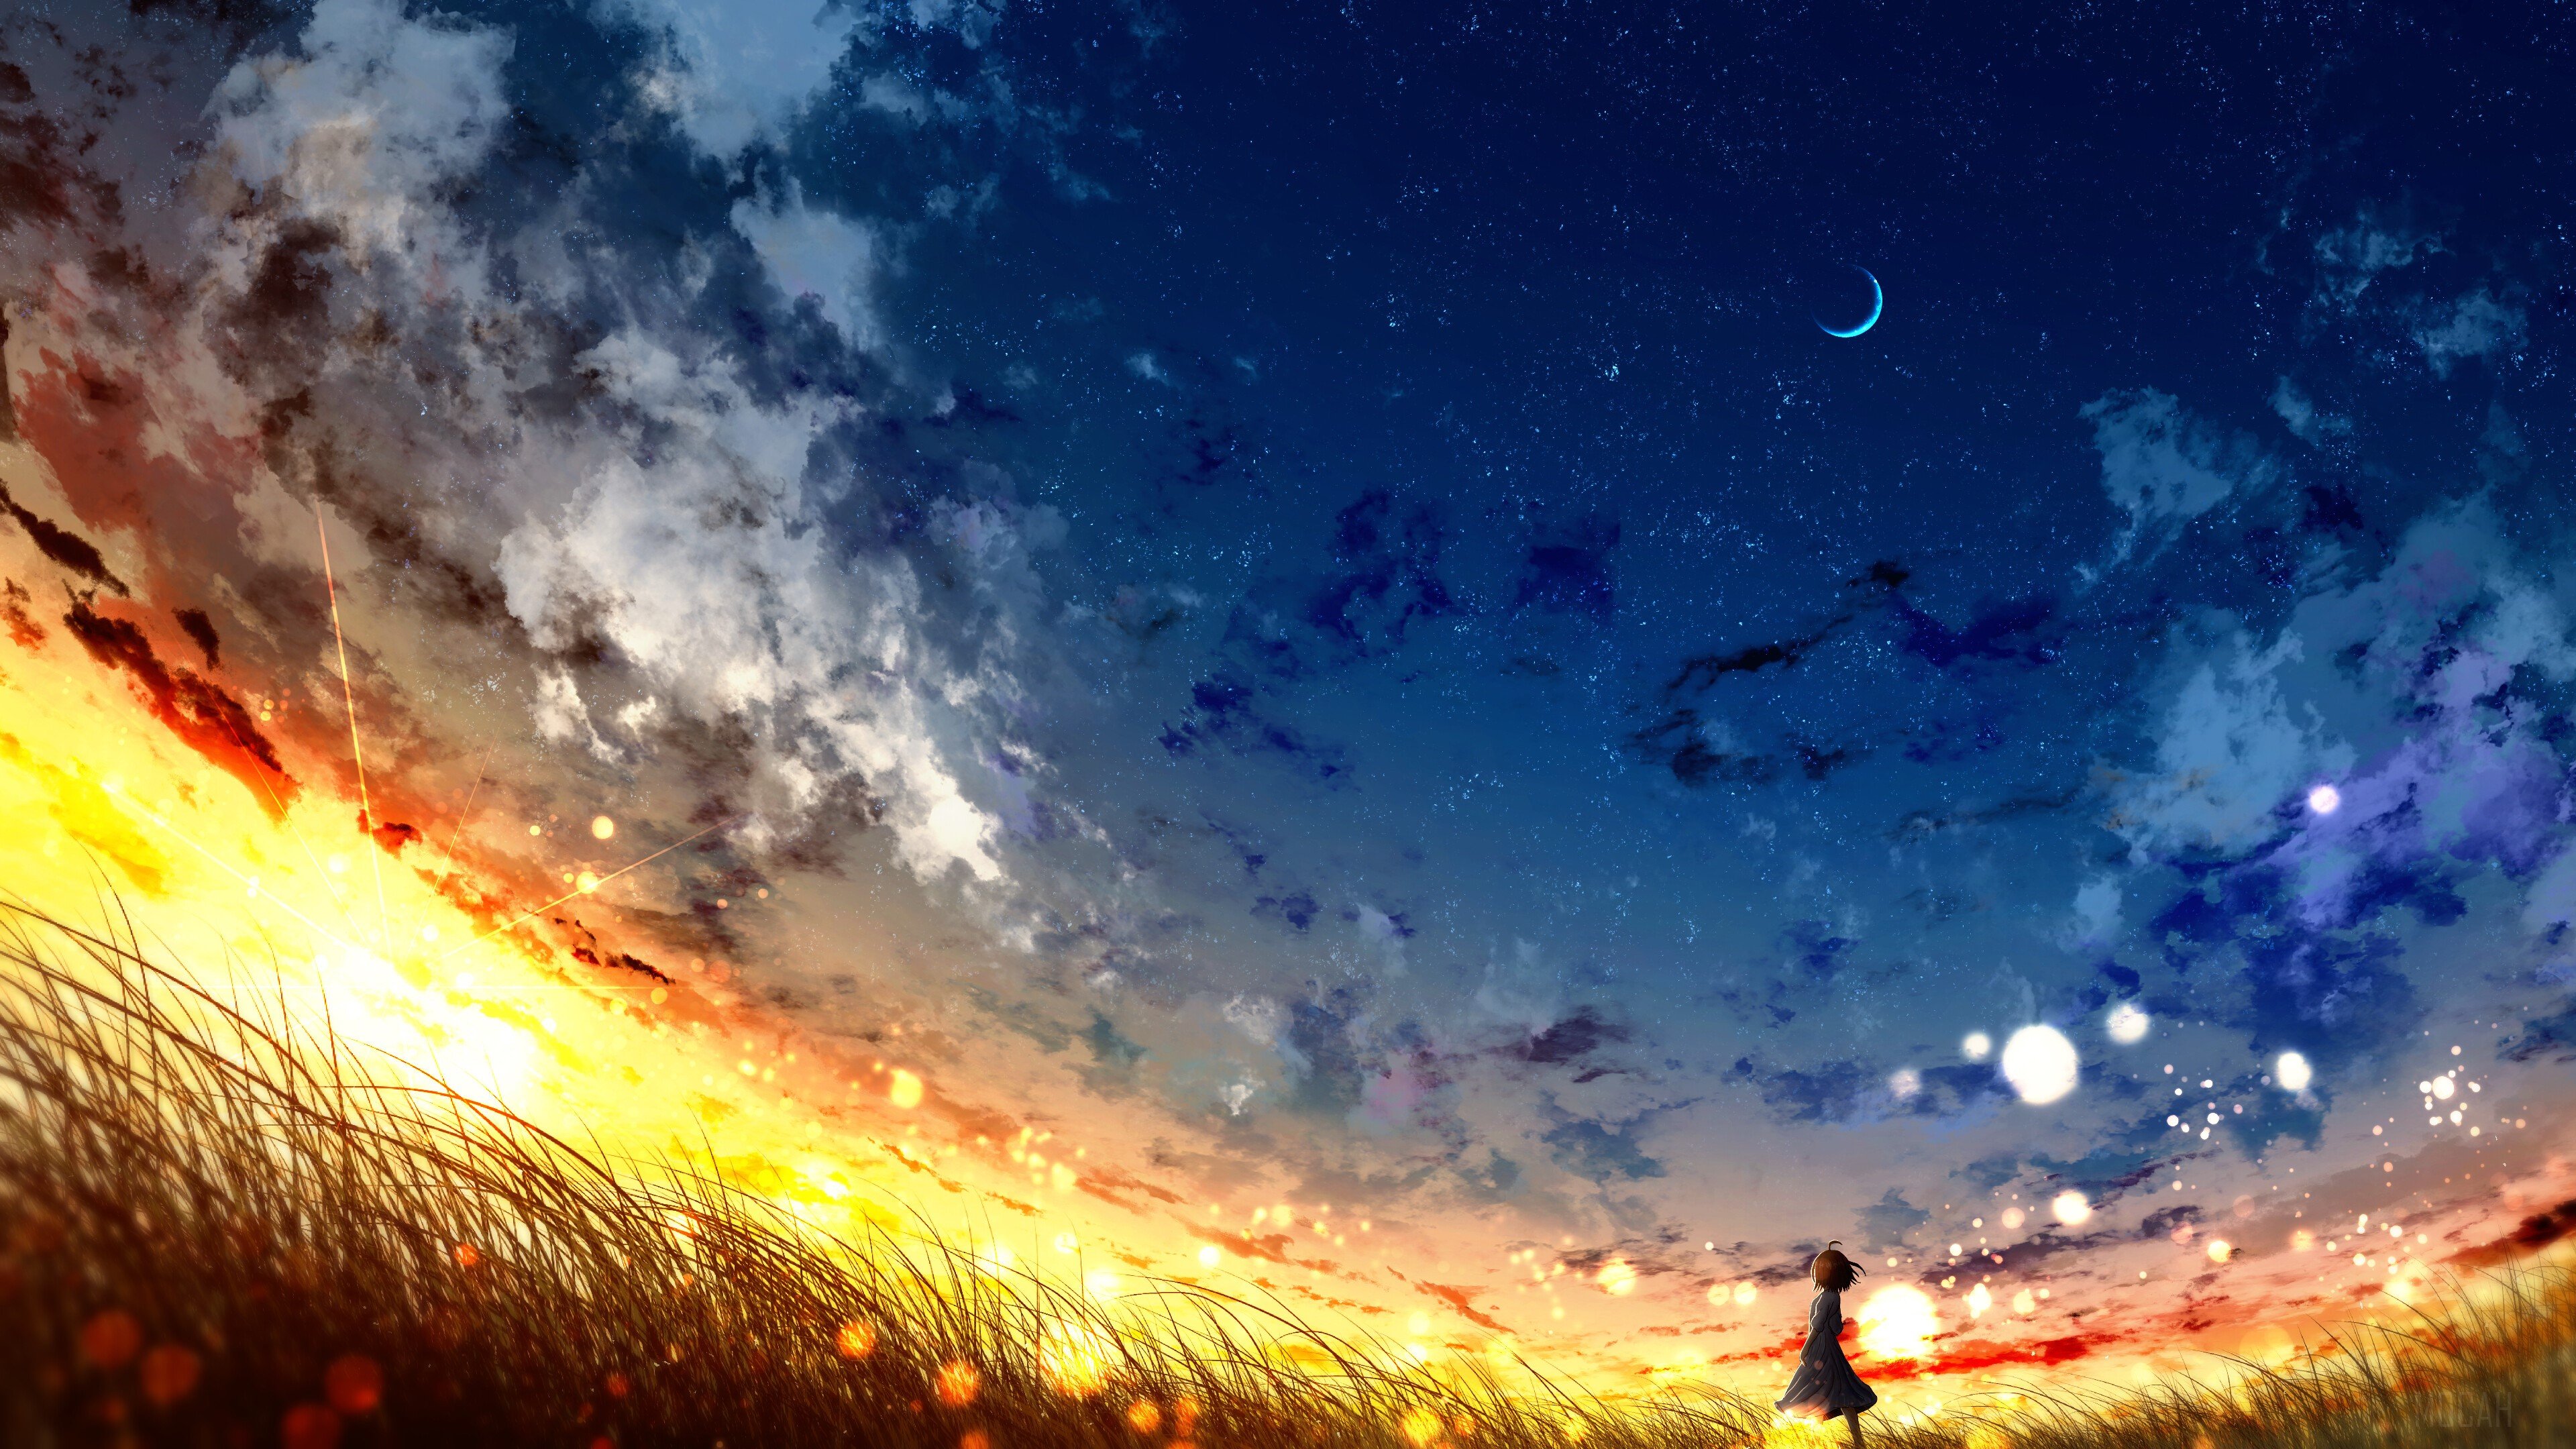 Aesthetic anime town, 0w0, calming, street, sunset, thanks, HD